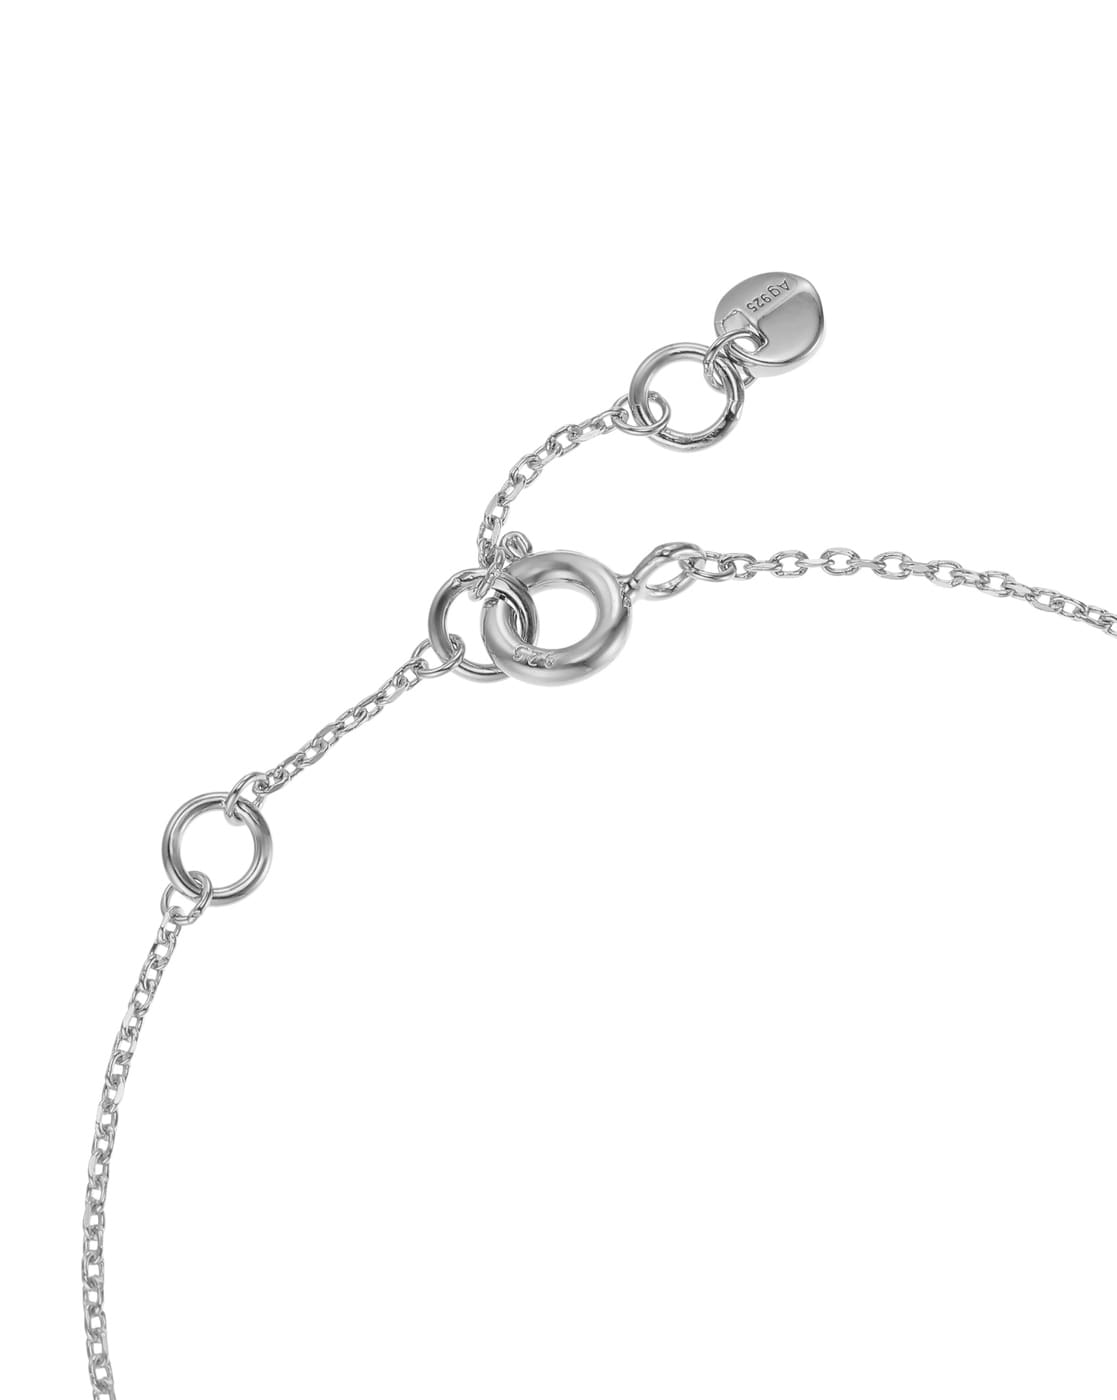 Bracelet with silver elements - letter K, clover - Ref No AP534-1174 / Apart